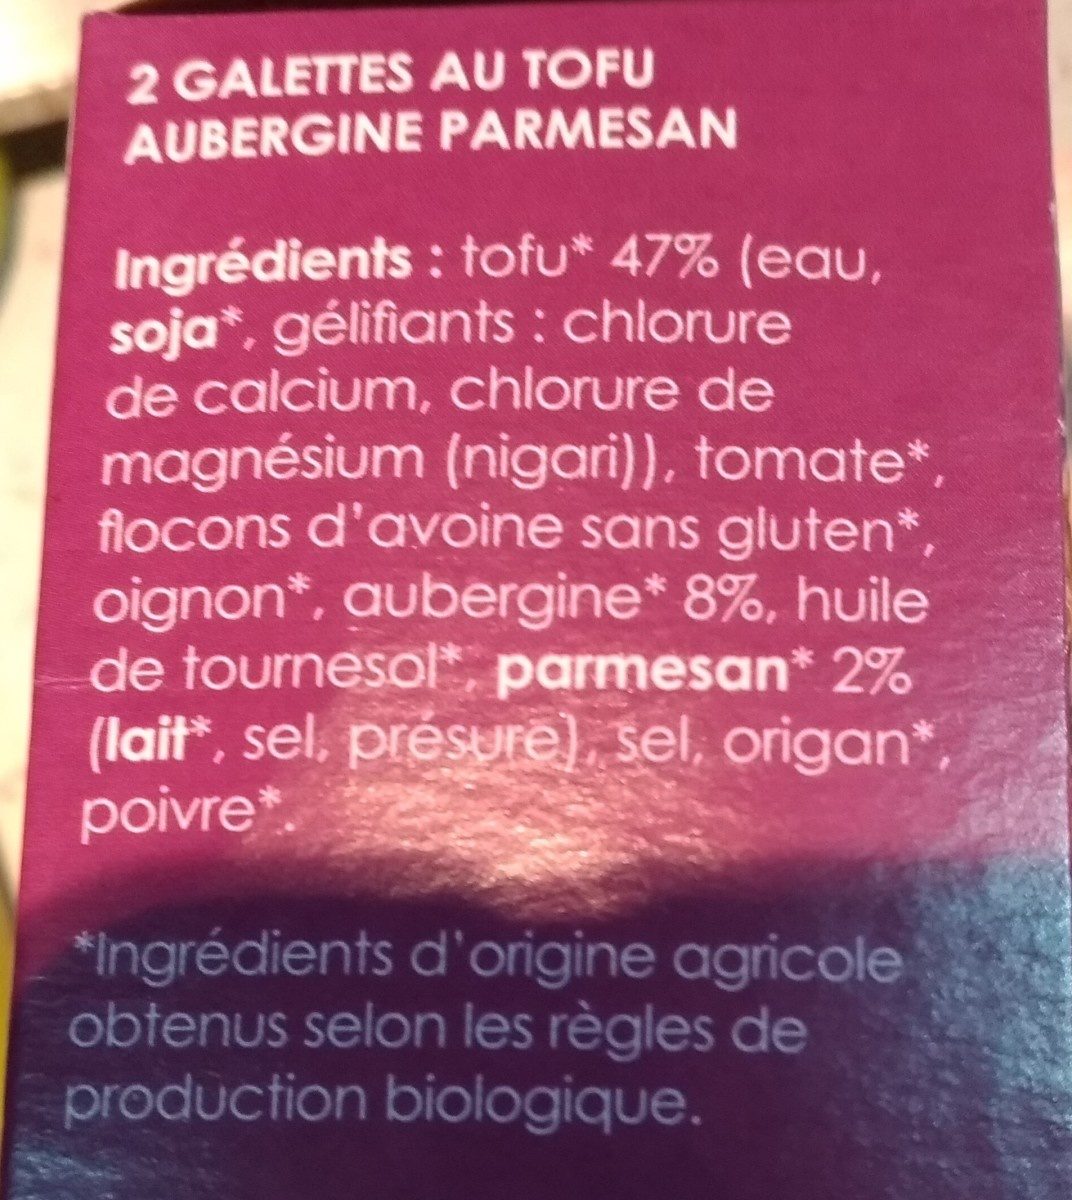 Galettes au tofu aubergine parmesan - Ingredients - fr